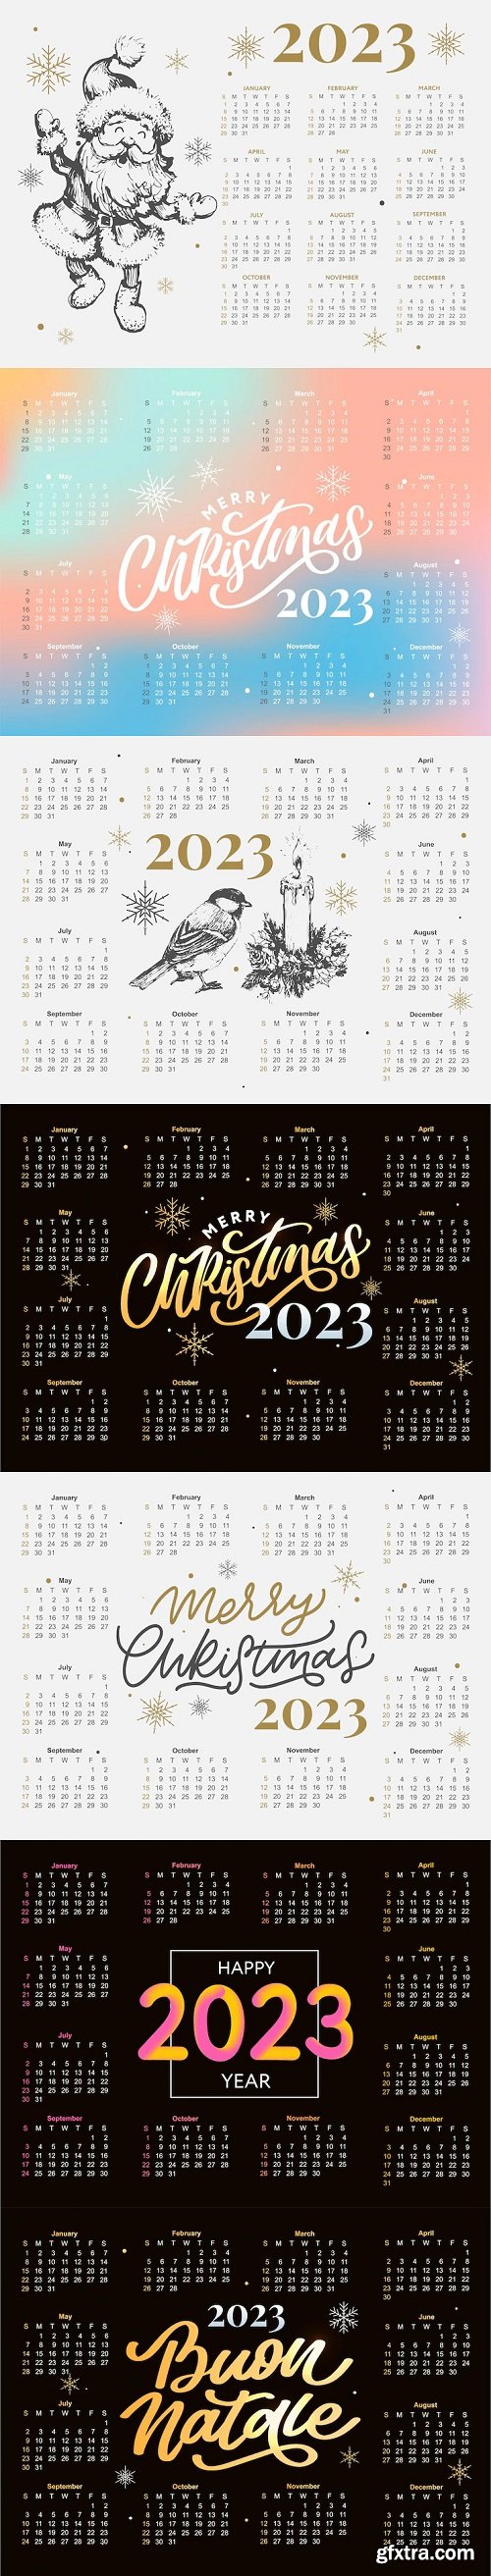 Calendar year vector illustration the week starts on sunday christmas snowflakes calendar template